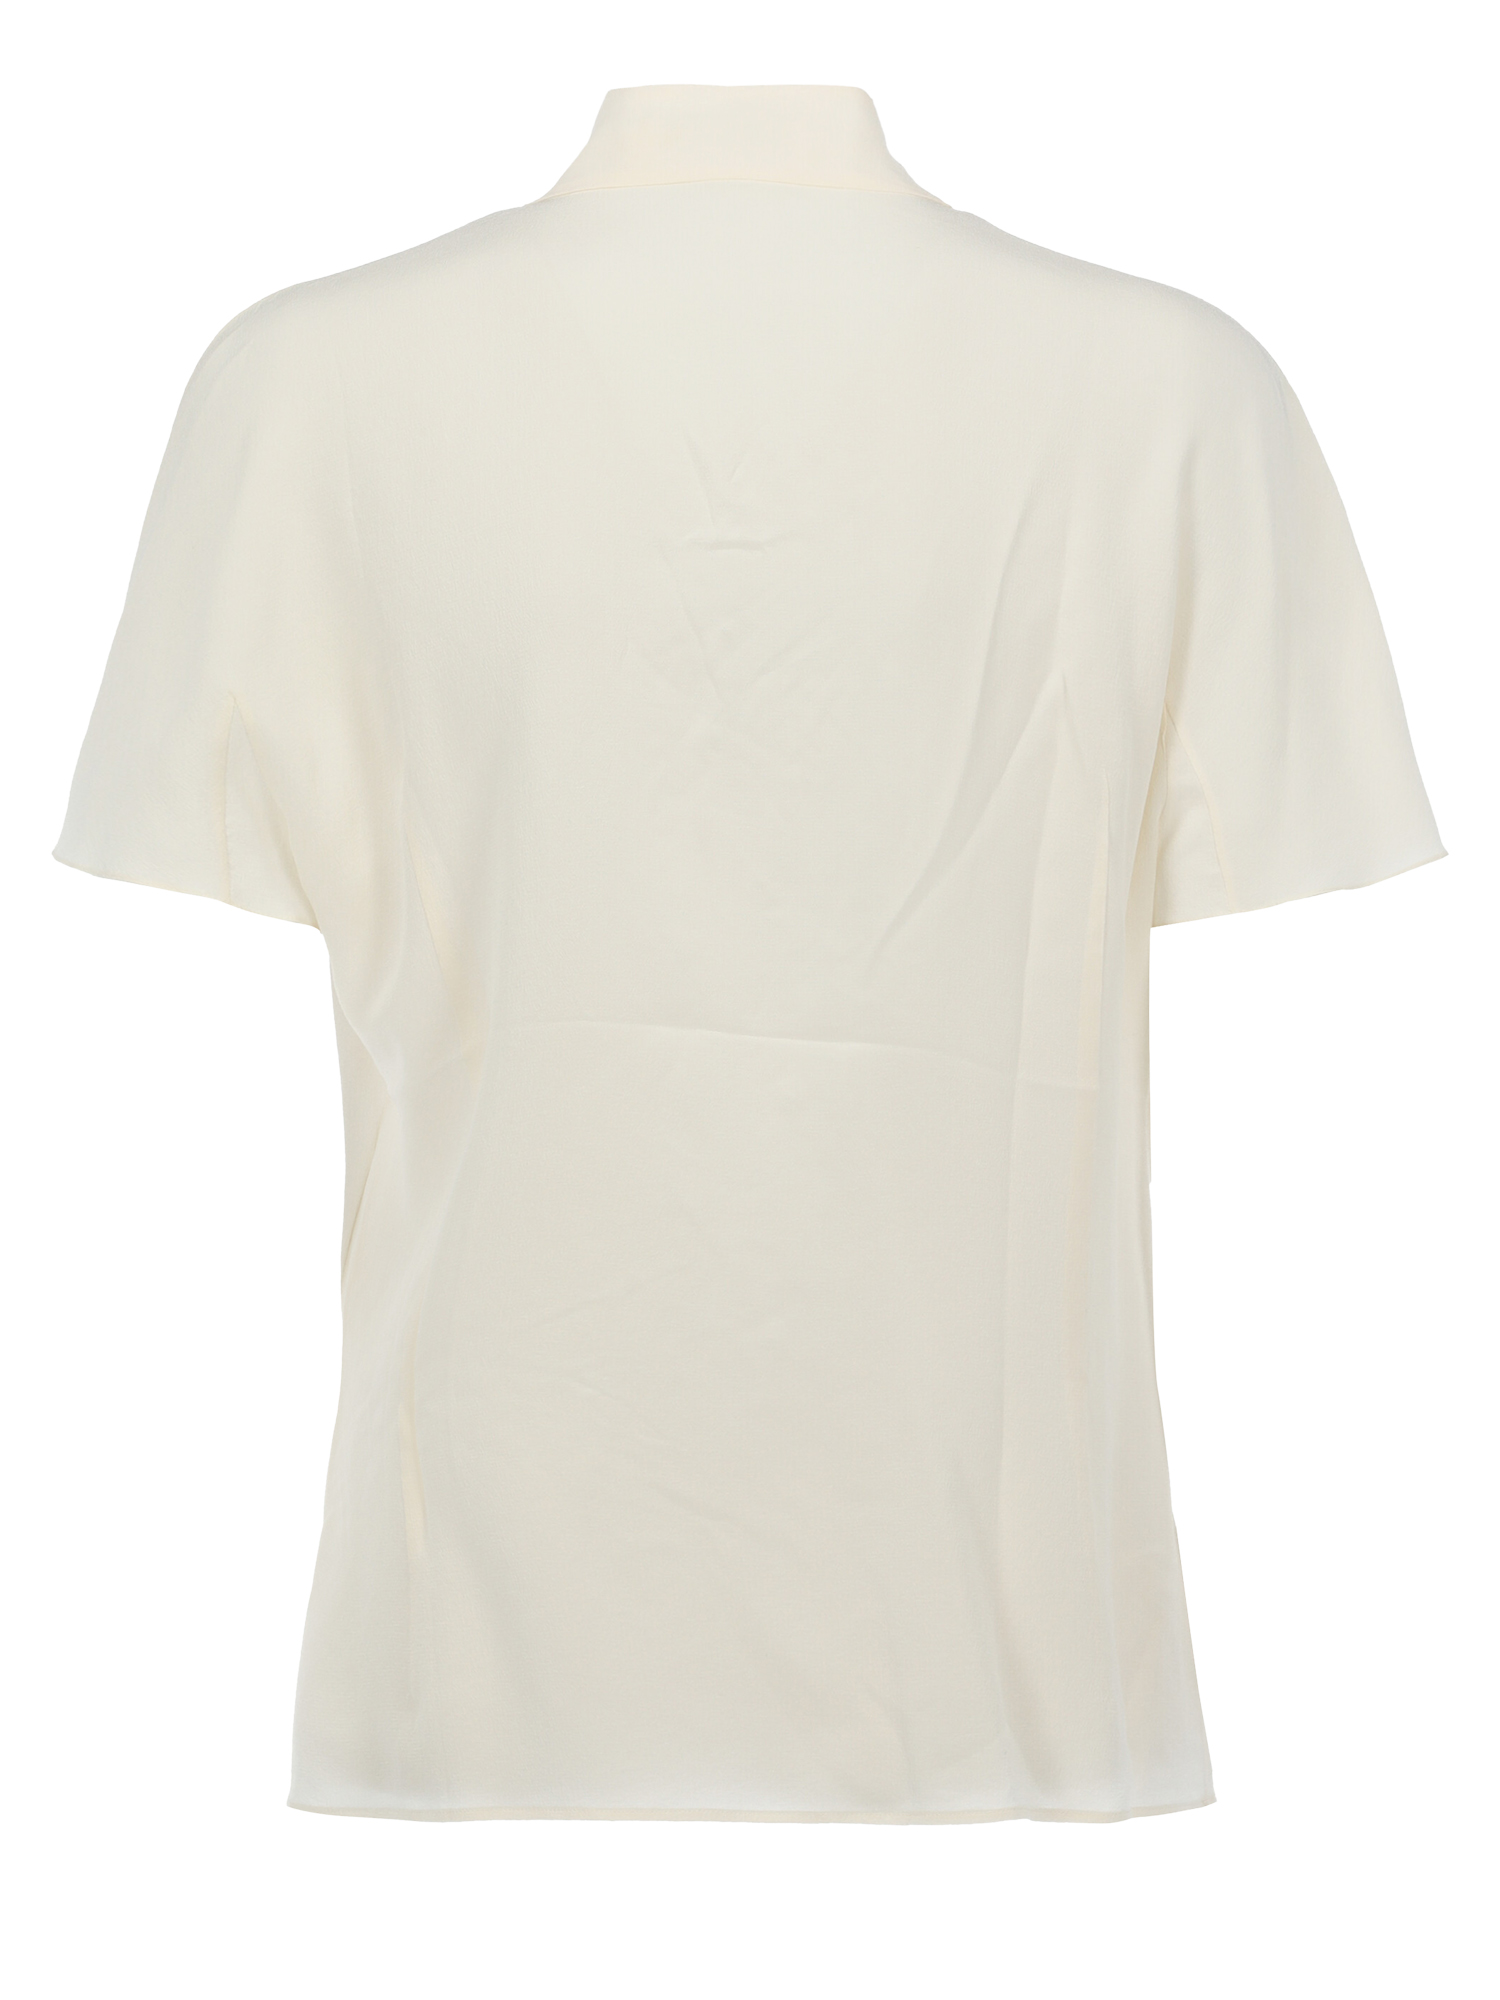 Dior Special Price Women Shirts White IT 48 | eBay